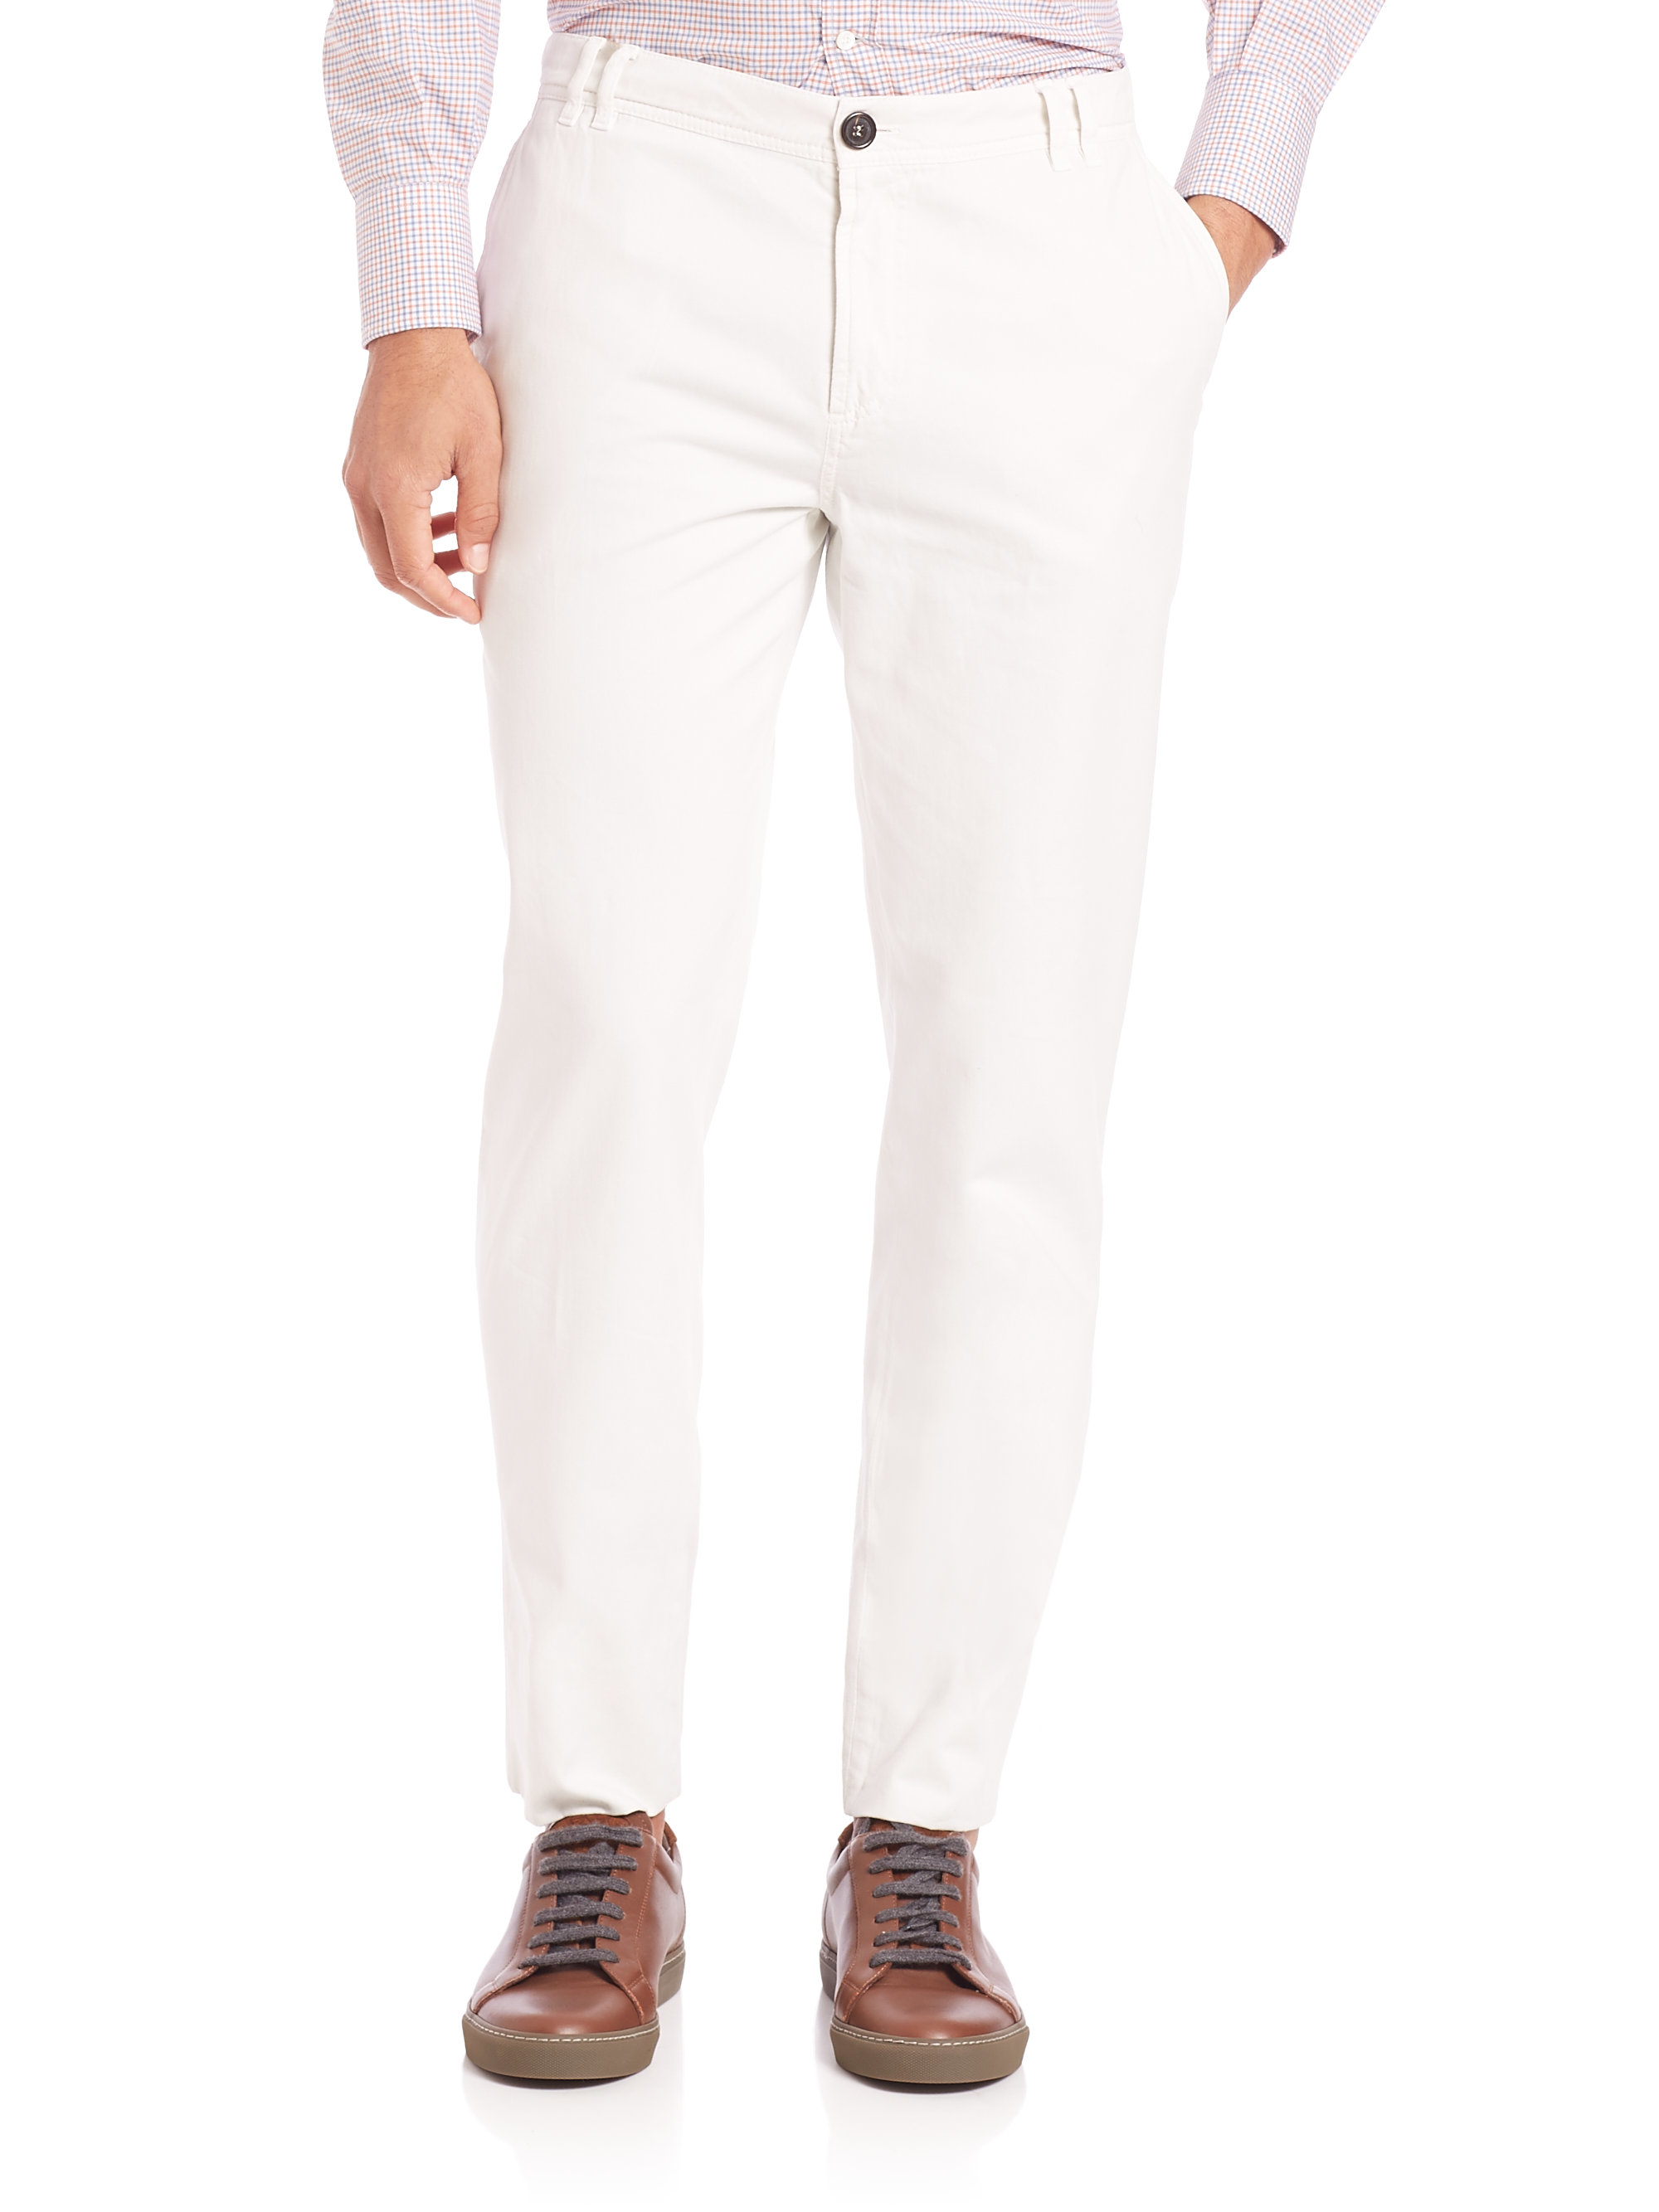 Lyst - Brunello Cucinelli Regular-fit Six-pocket Pants in White for Men